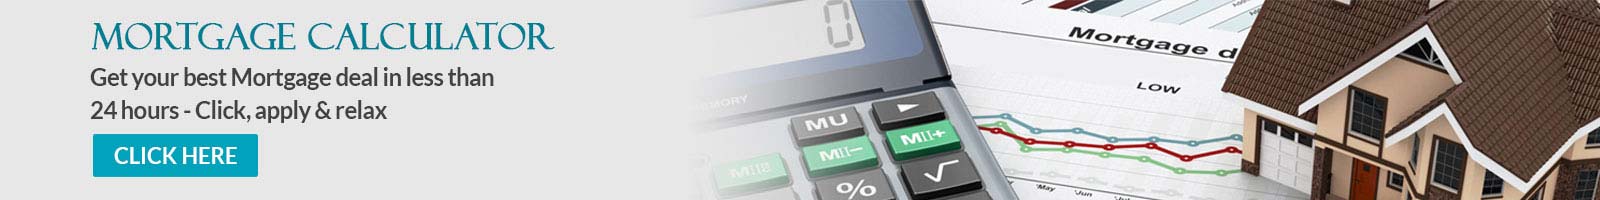 Mortgage Calculator Banner